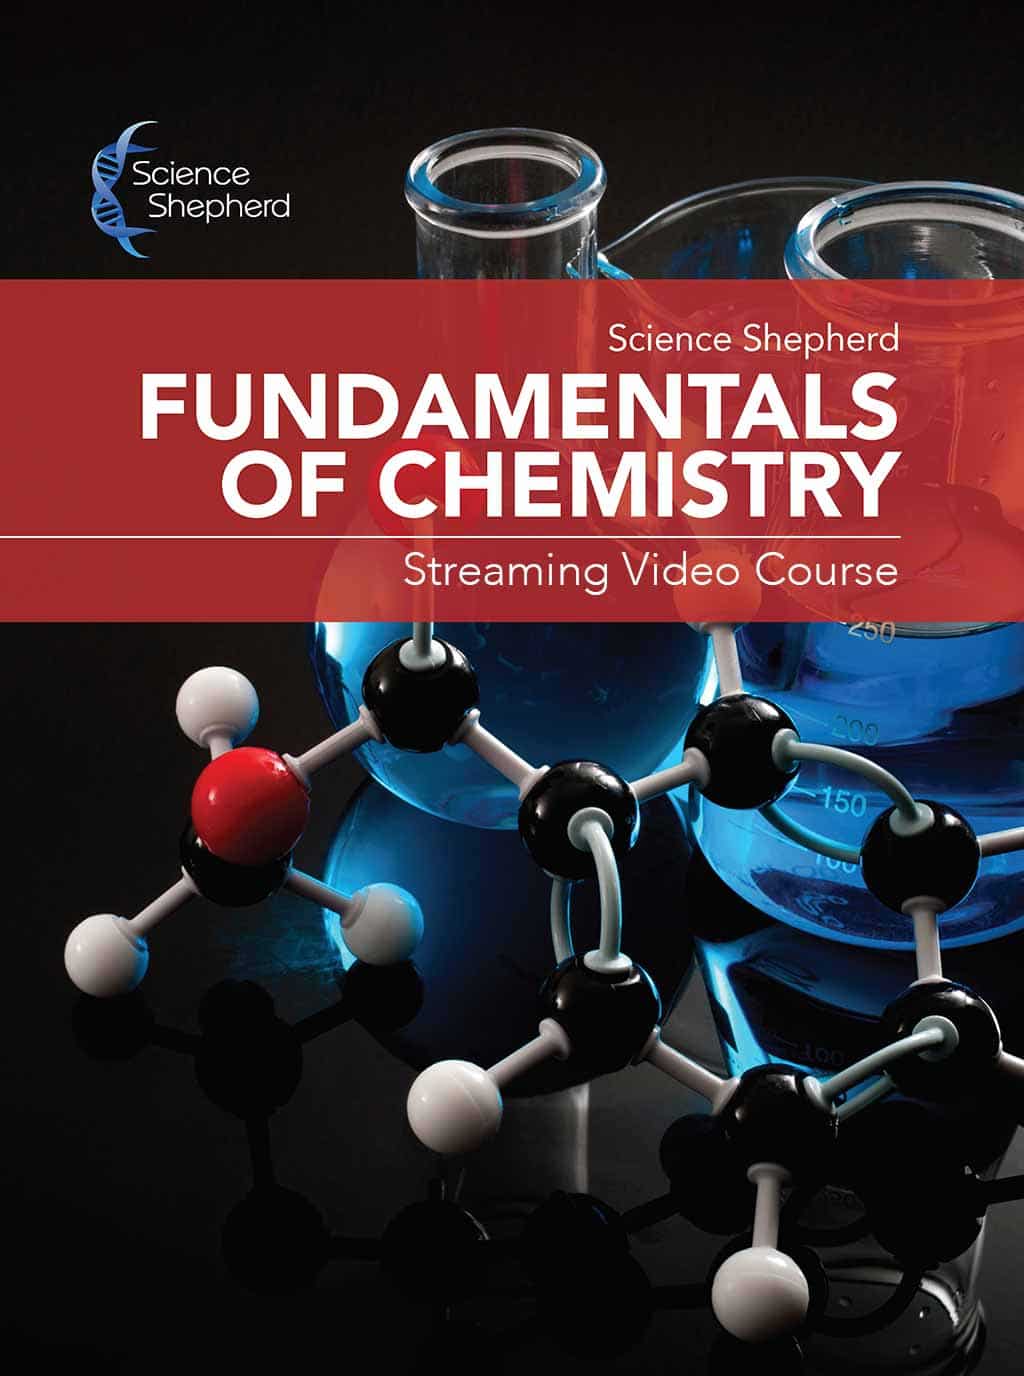 Fundamentals of Chemistry homeschool videos cover